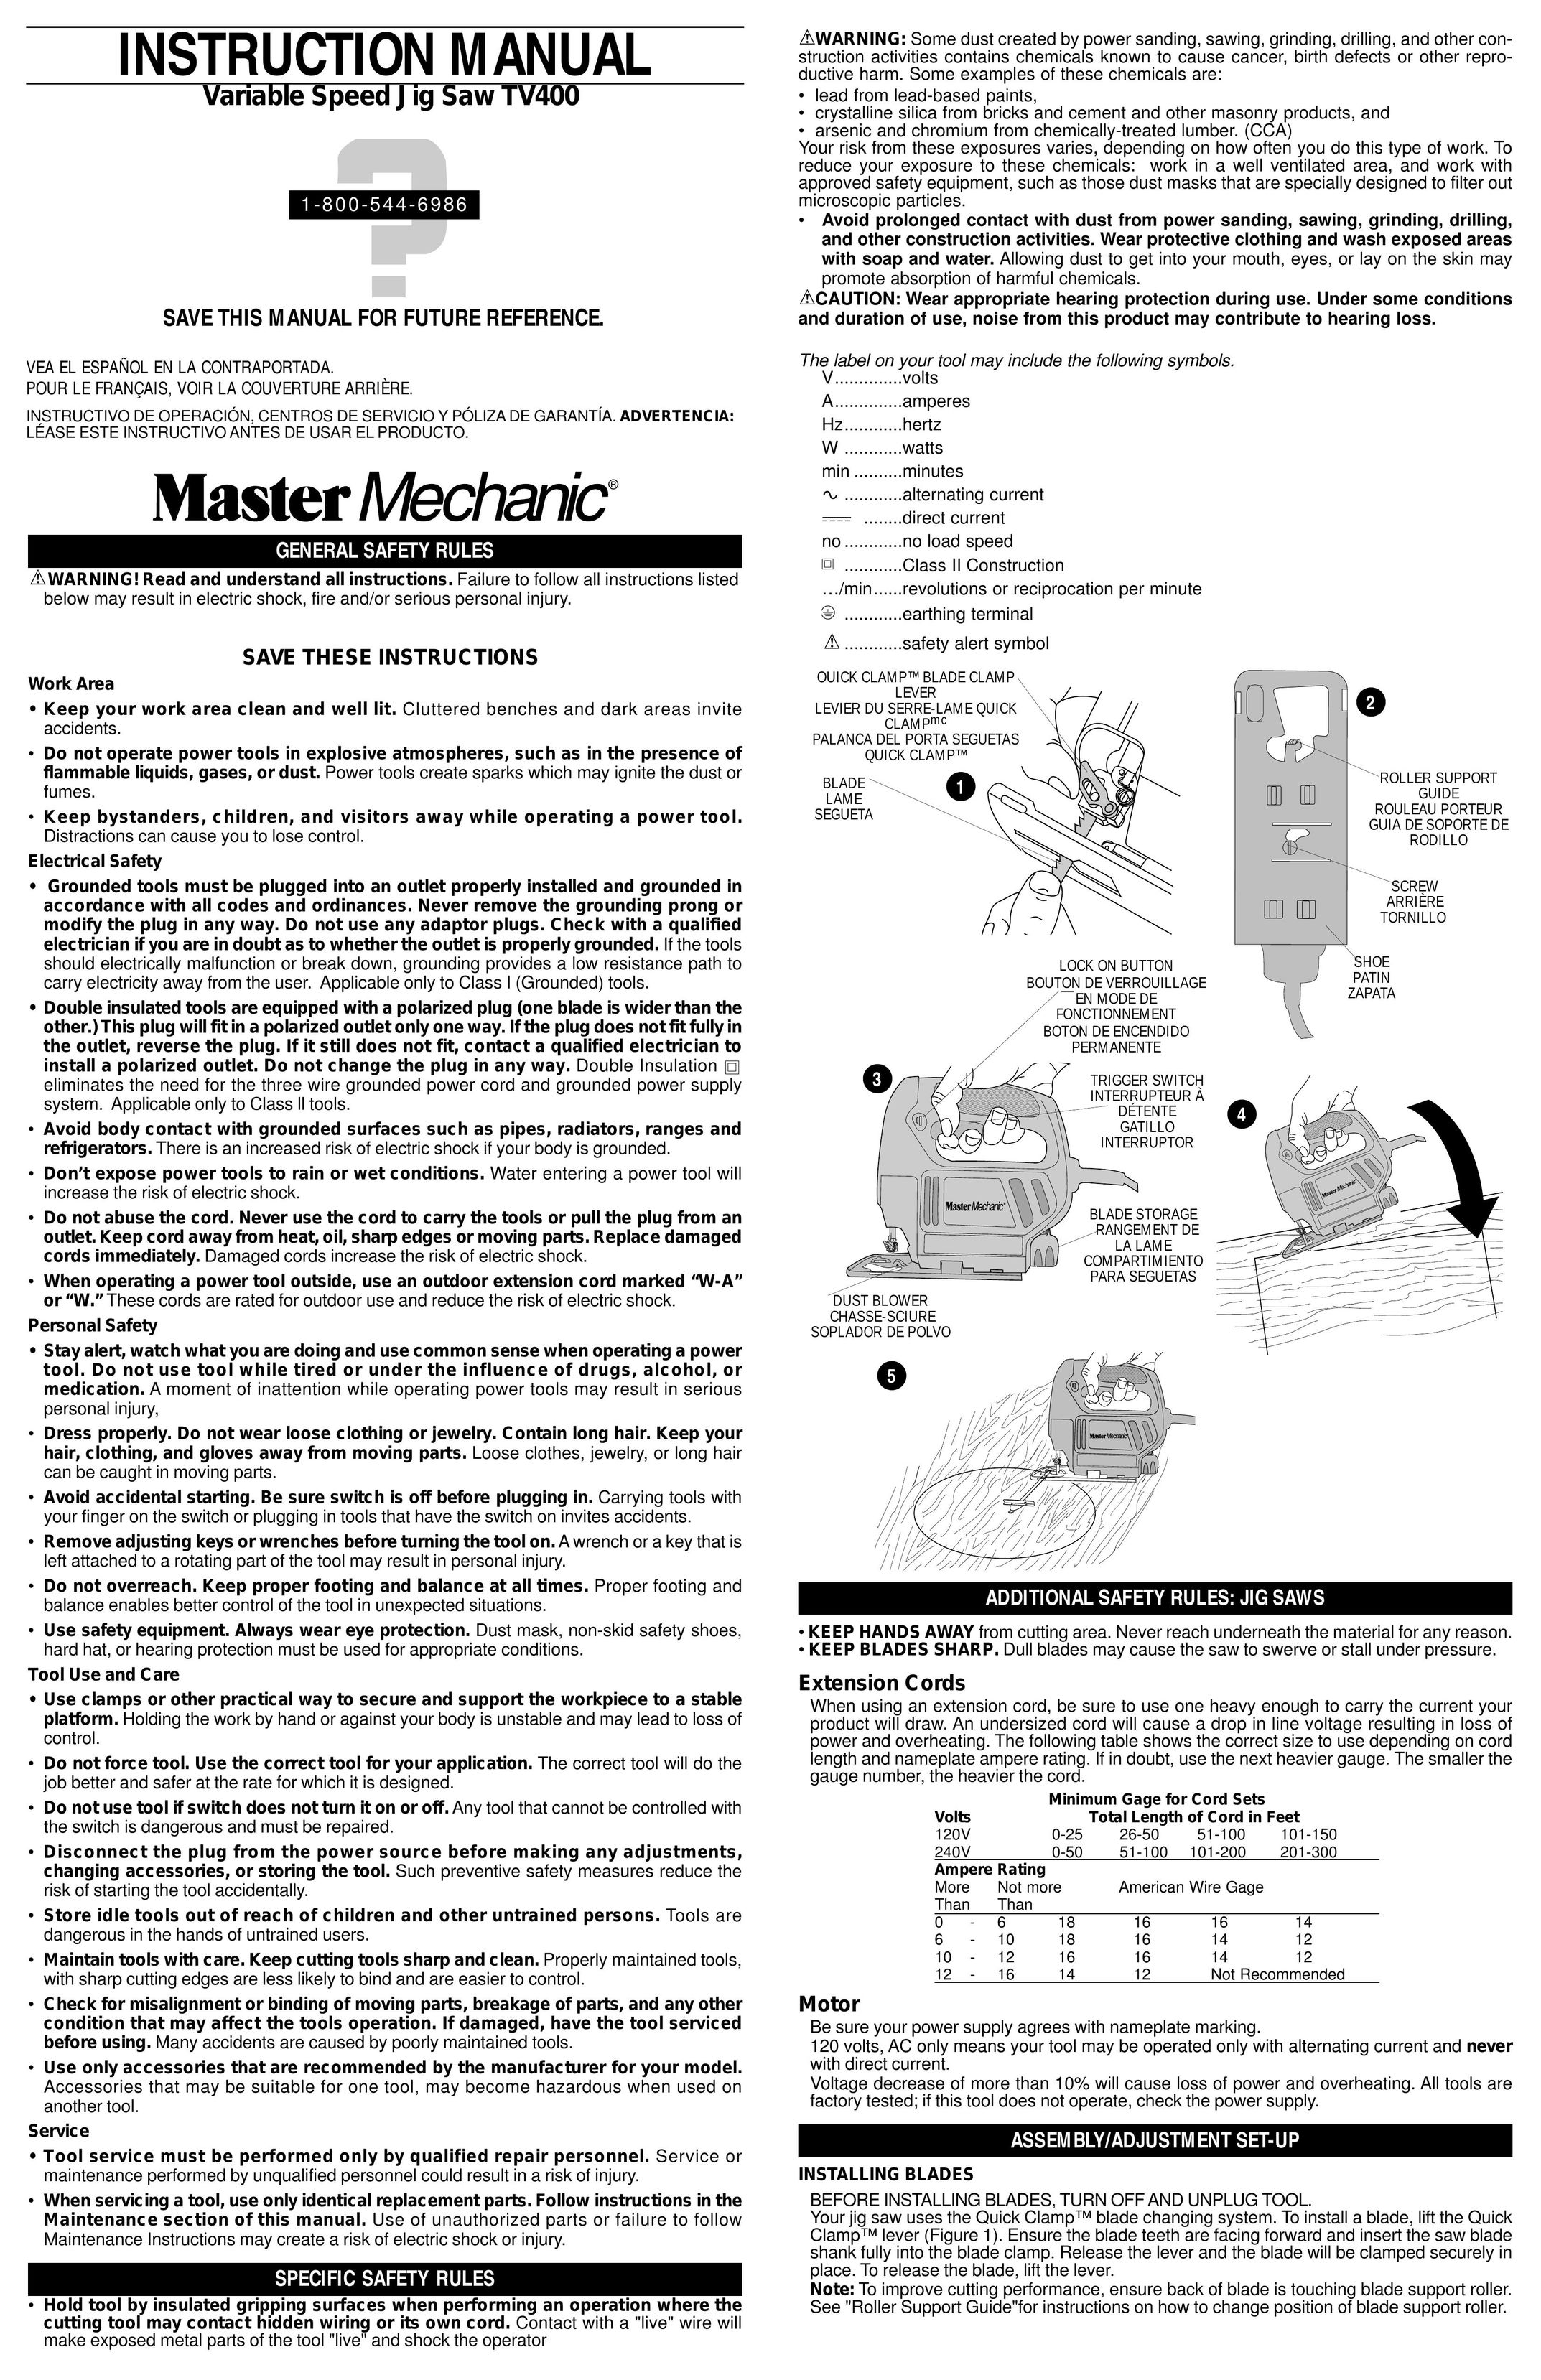 Black & Decker 376697-01 Saw User Manual